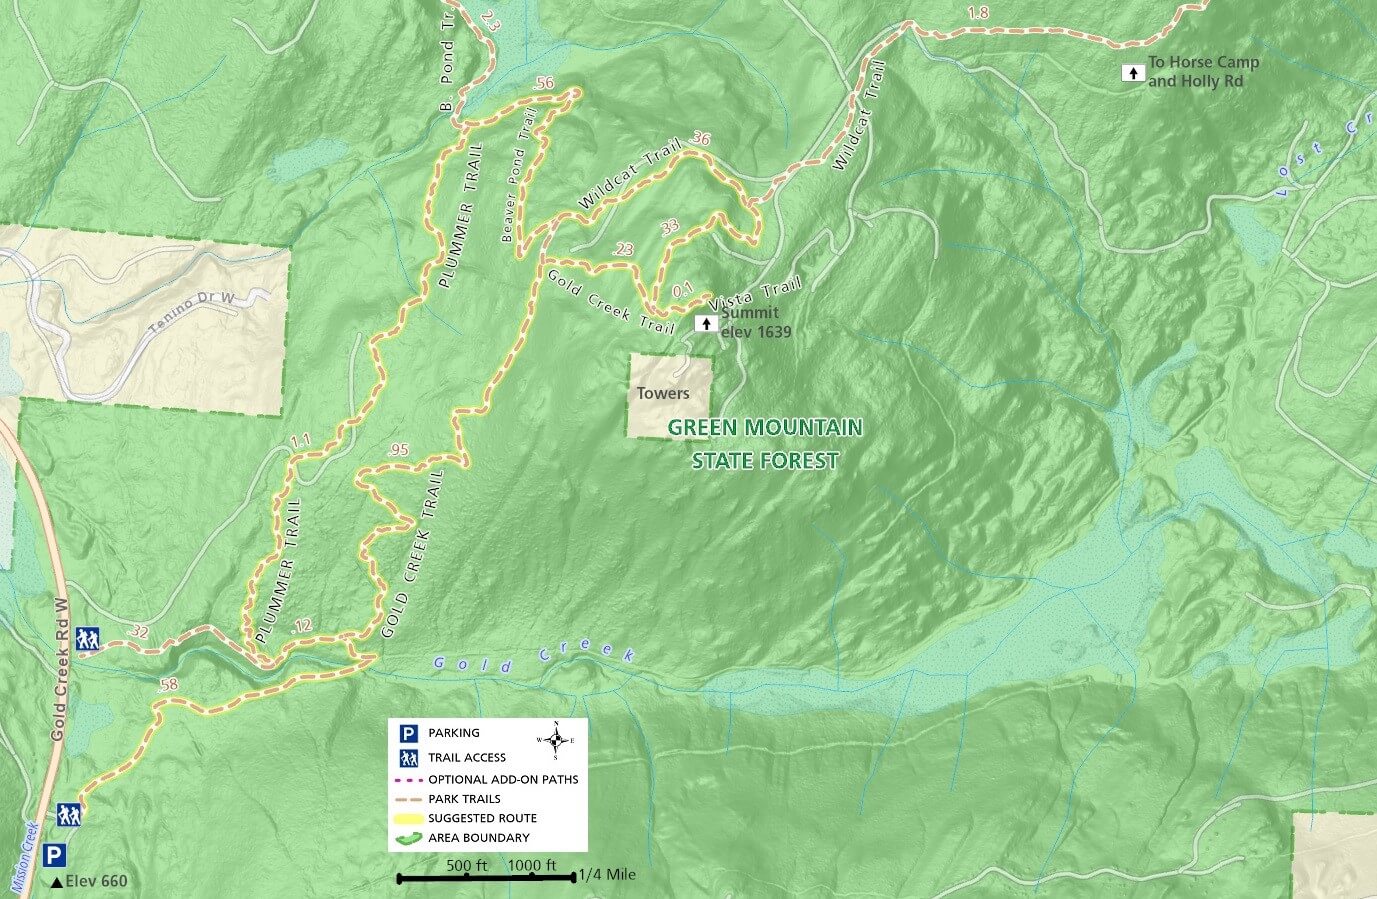 Green Mountain Trail Map - Gold Creek